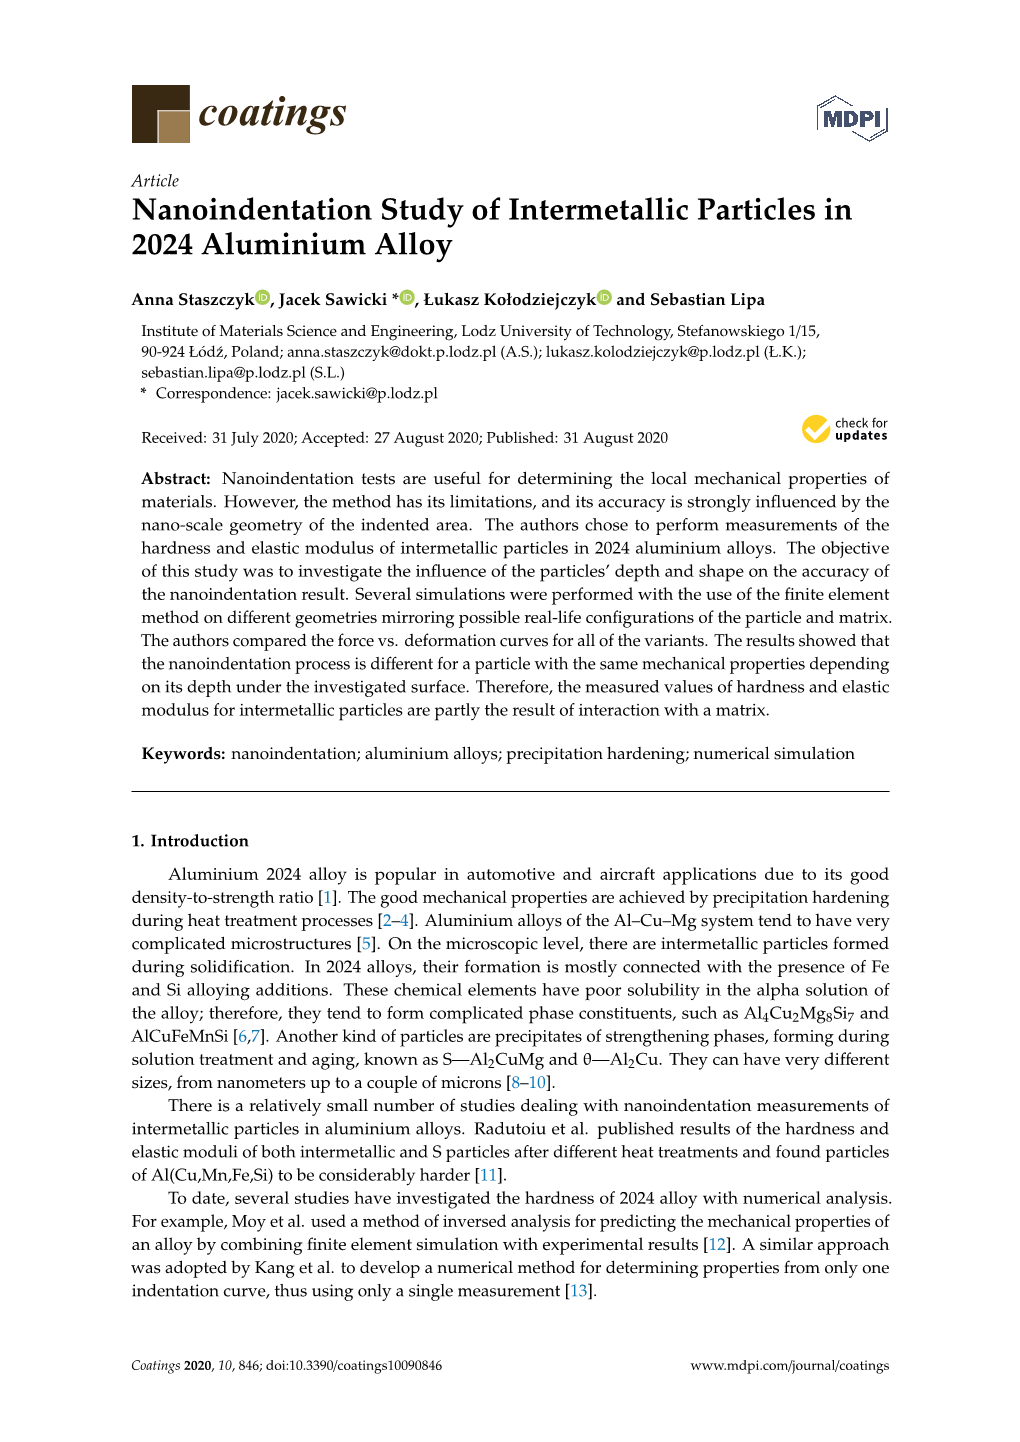 Nanoindentation Study of Intermetallic Particles in 2024 Aluminium Alloy